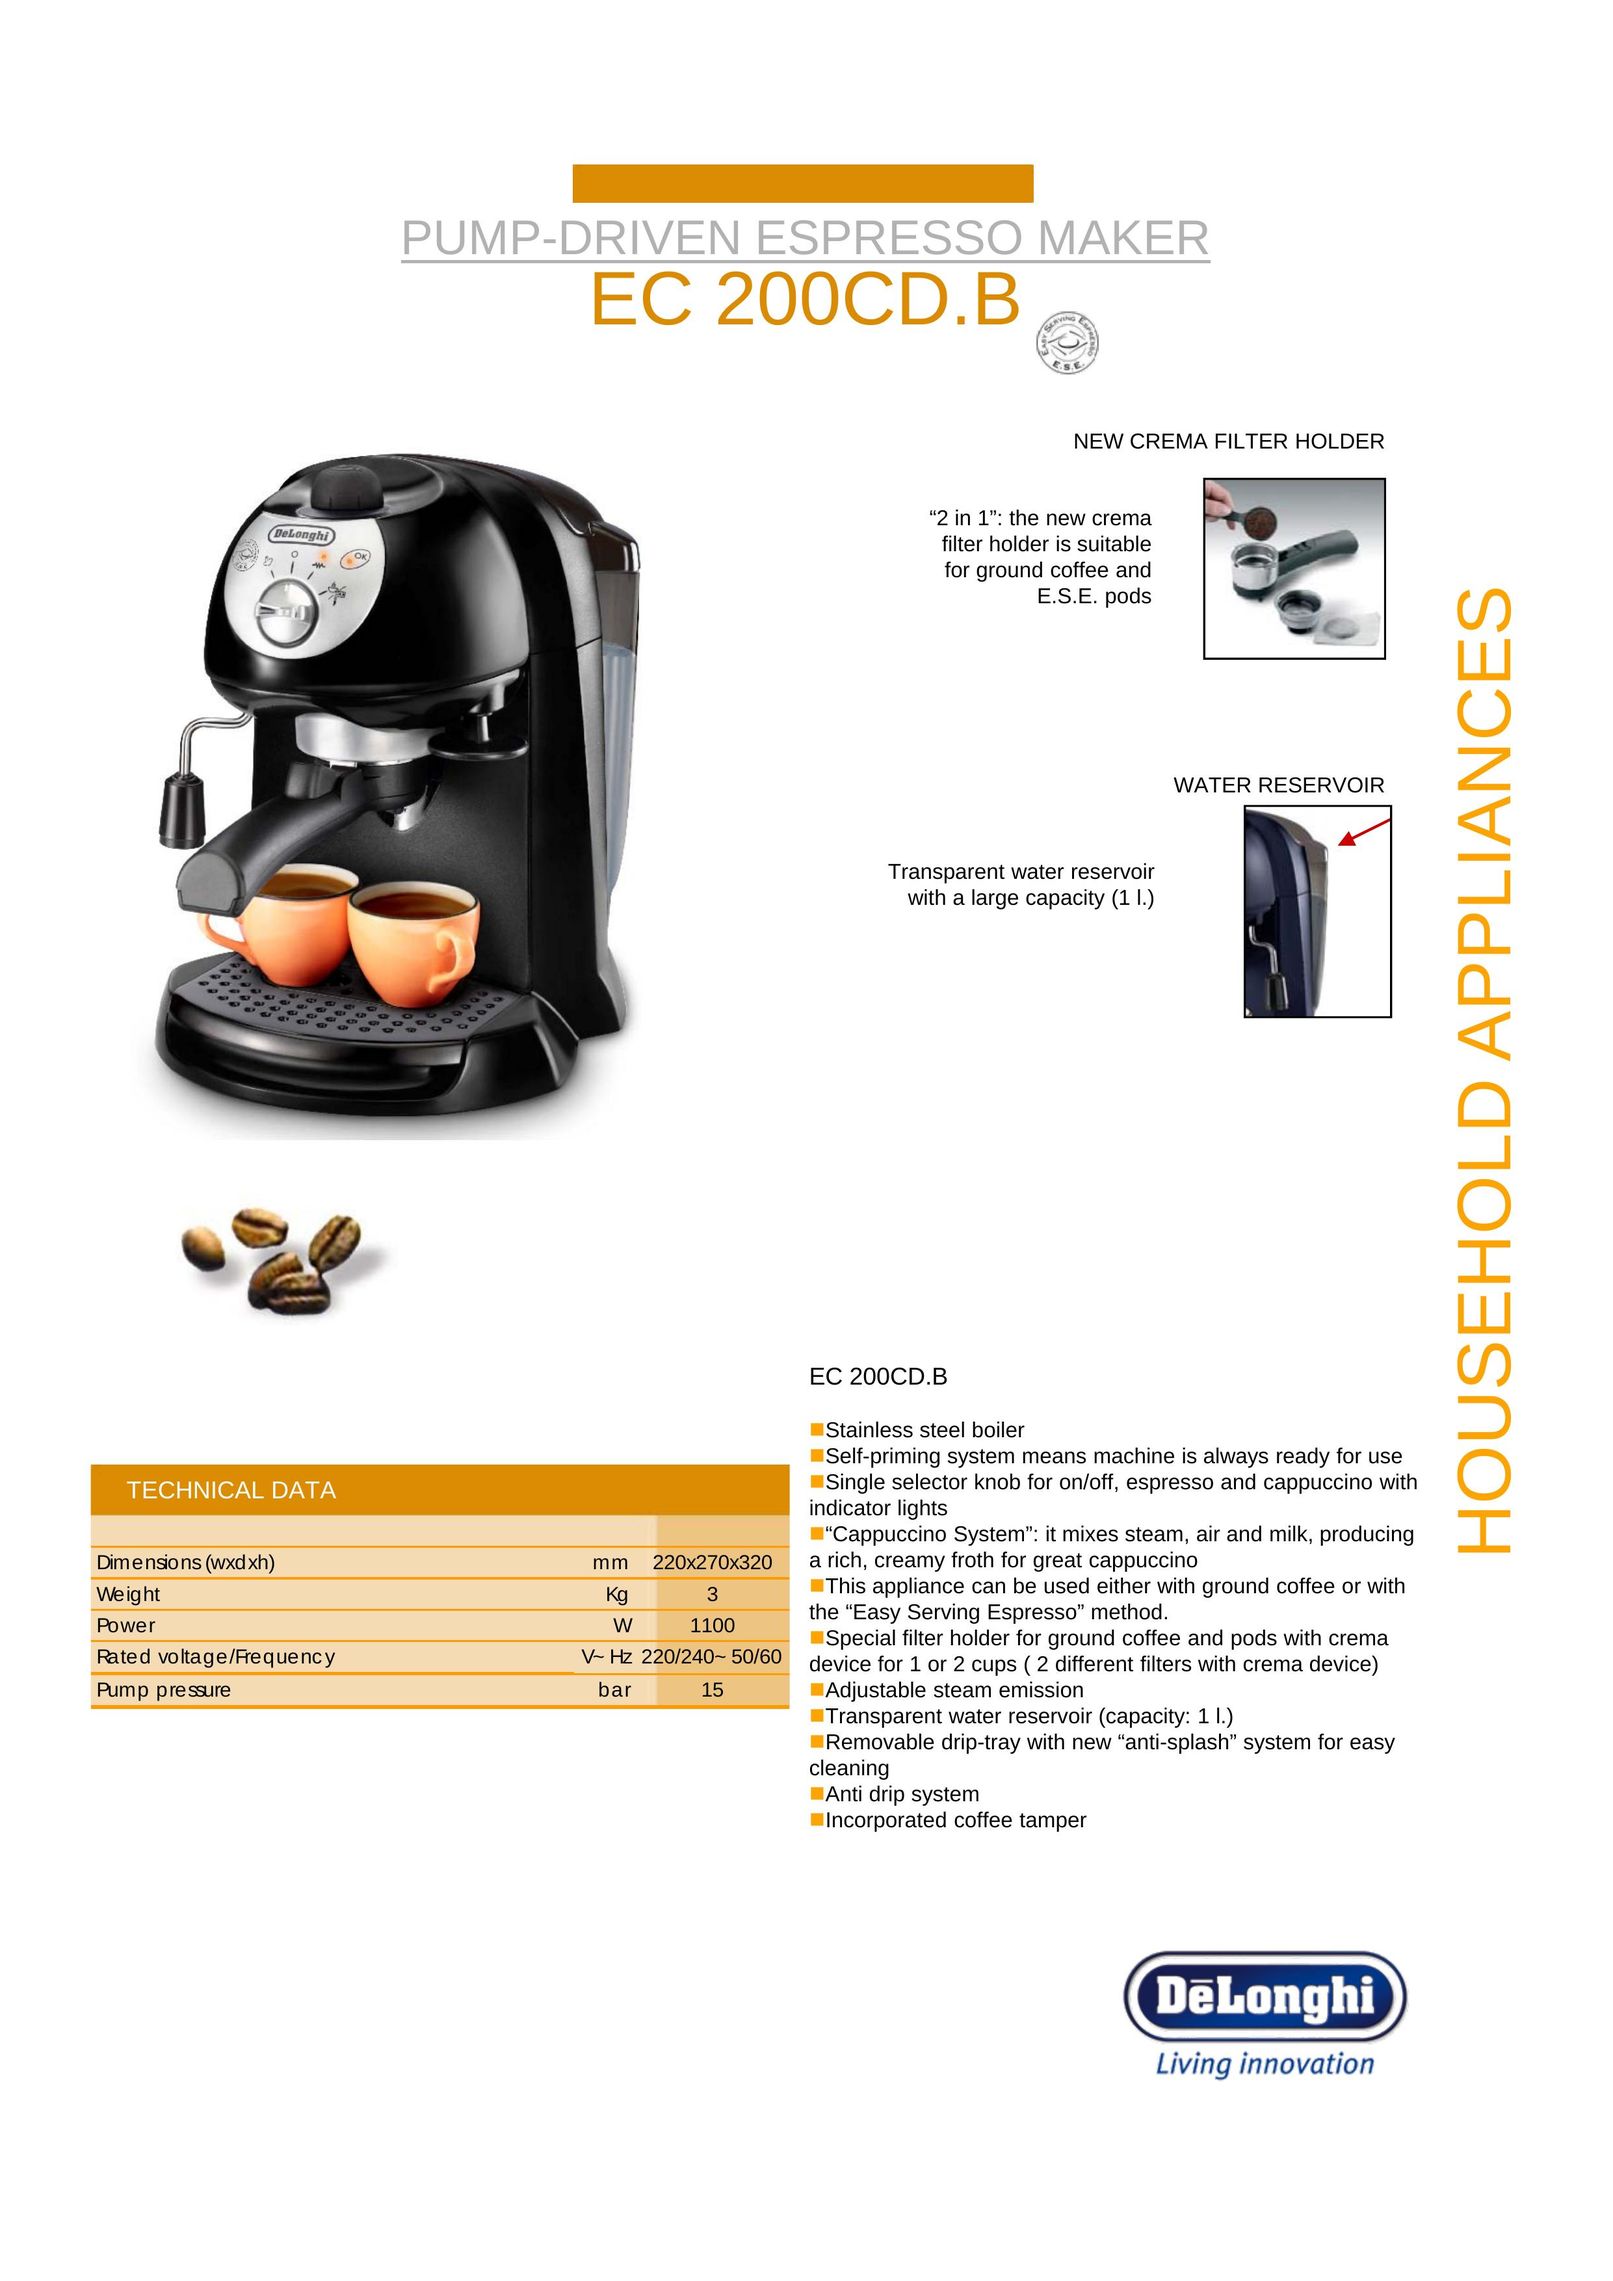 DeLonghi EC 200CD.B Coffee Grinder User Manual